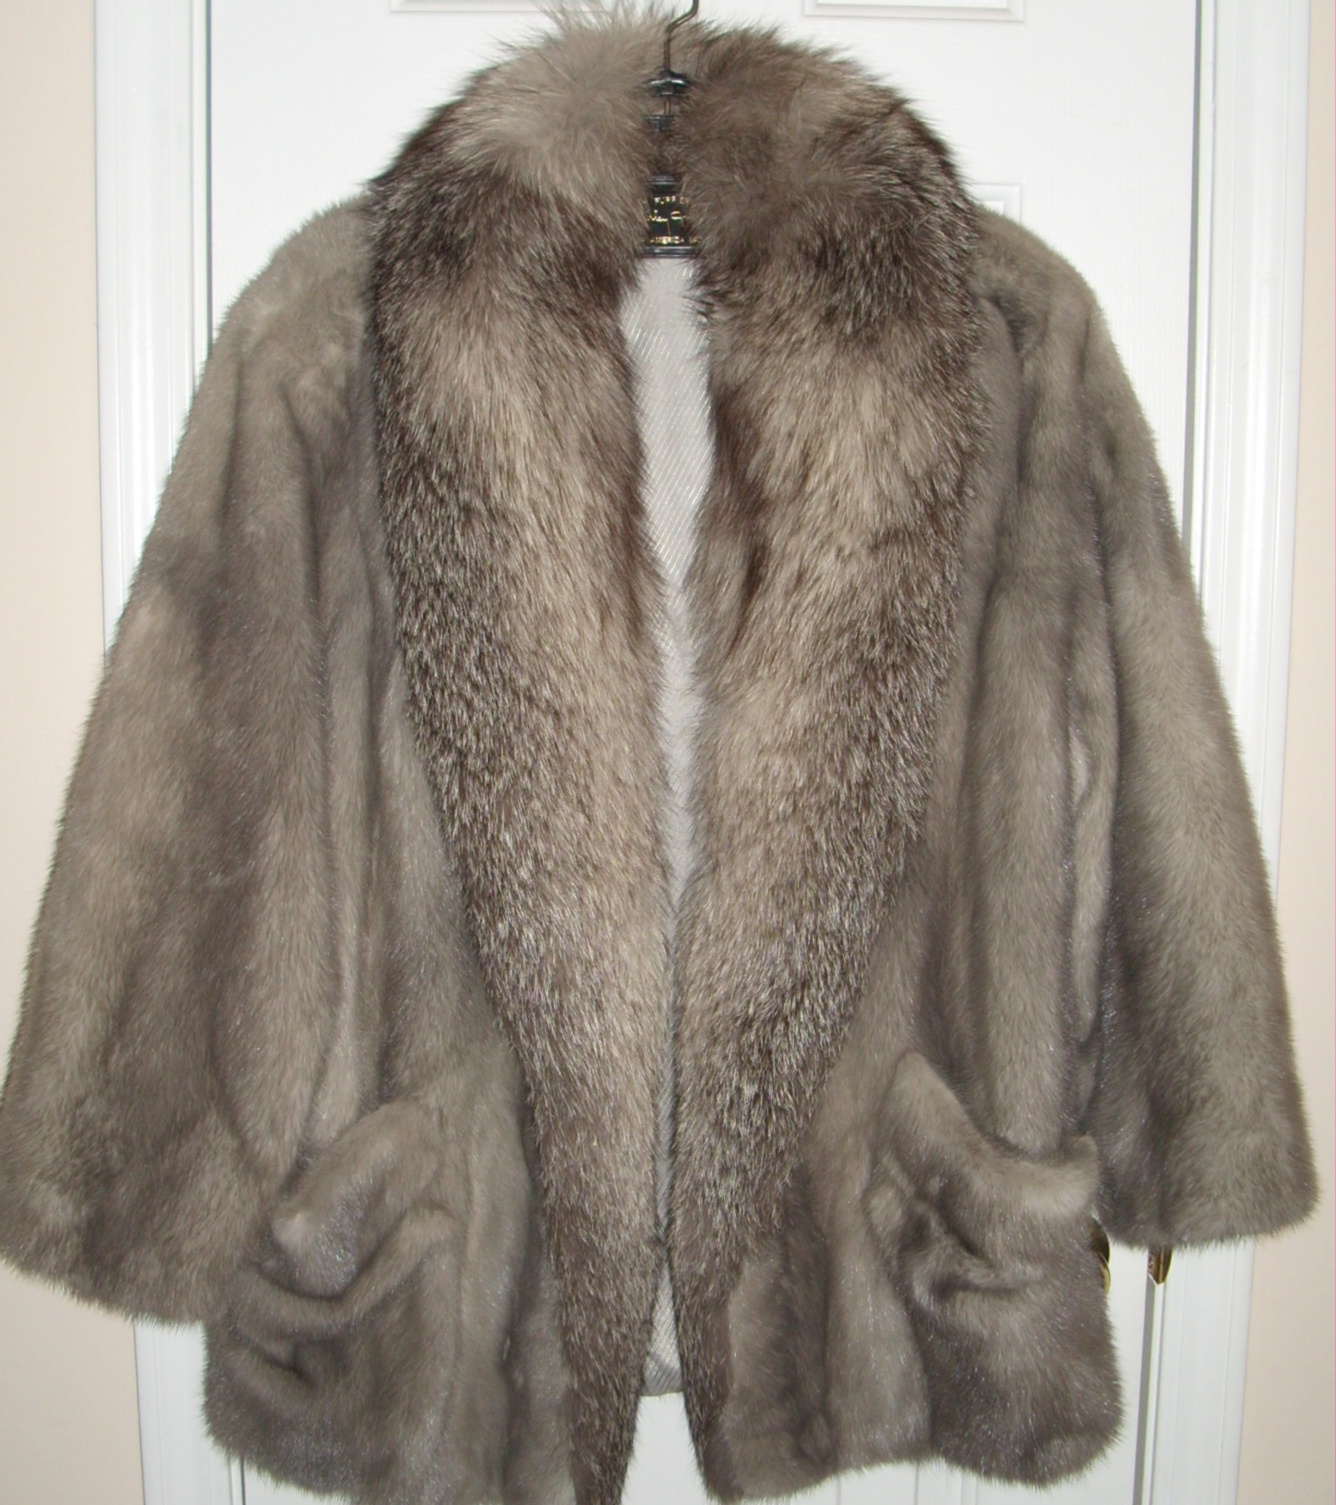 eBay Selling Coach: Vintage Mink Coat - Is it Real or Fake?